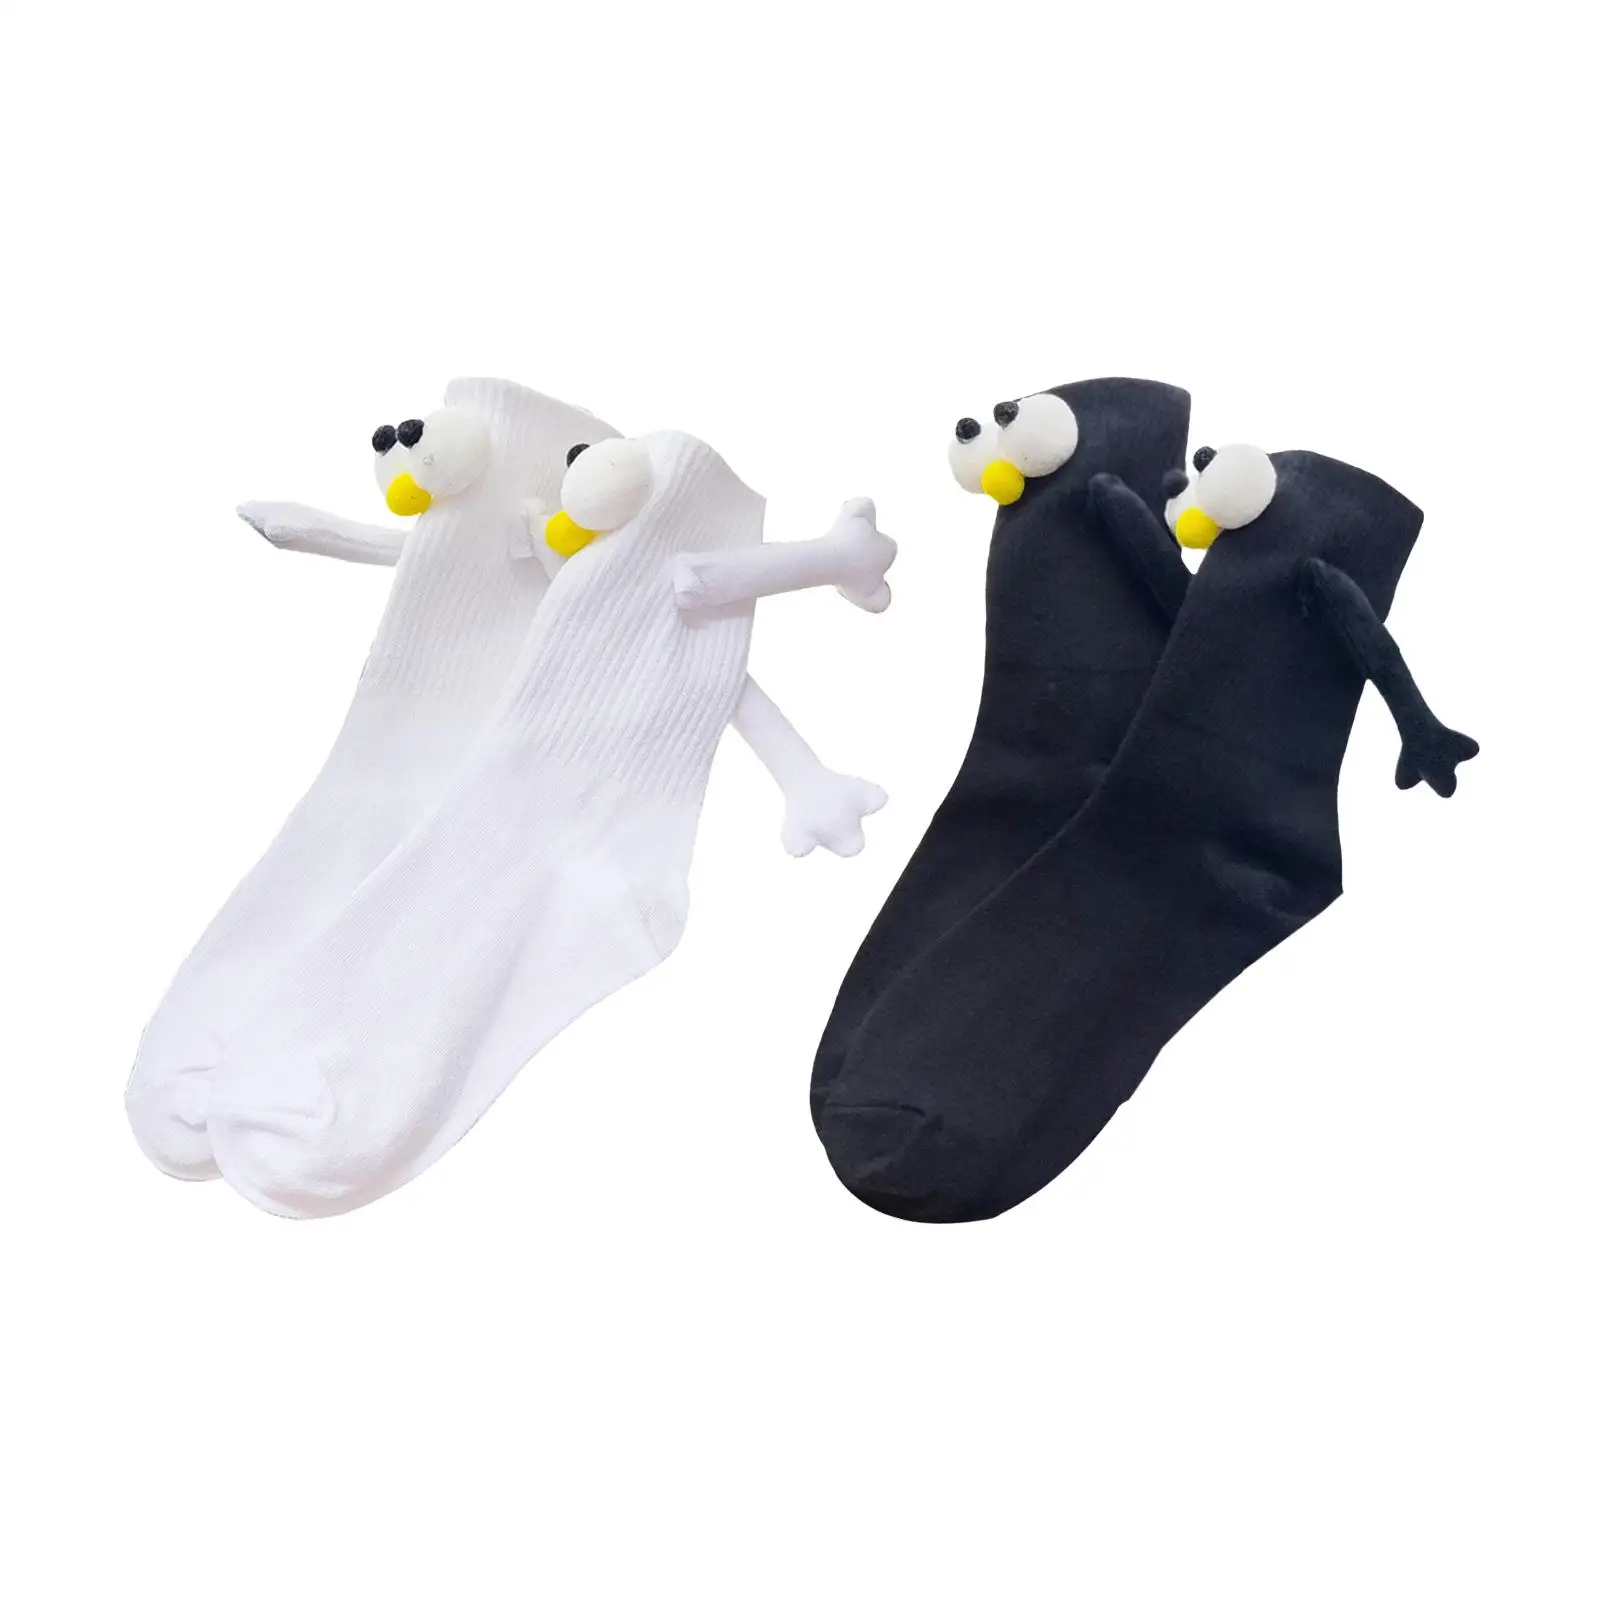 Suction 3D Couple Socks Novelty Socks Summer Fashion Couple Holding Hands Sock for Home Bedroom Hiking Living Room Classroom